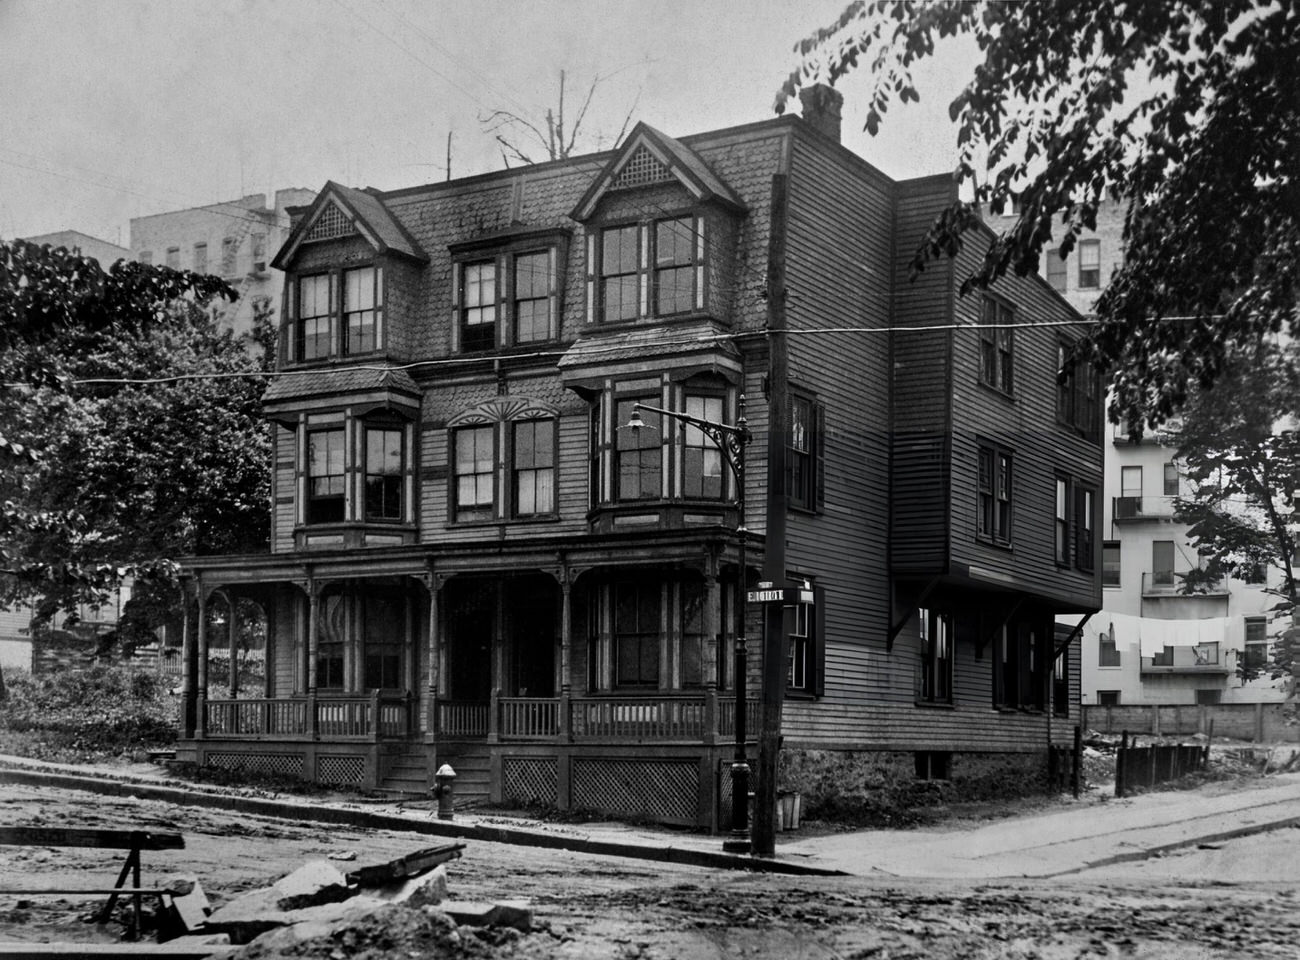 Property At 169Th Street And Walton Avenue, Bronx, Circa 1925.